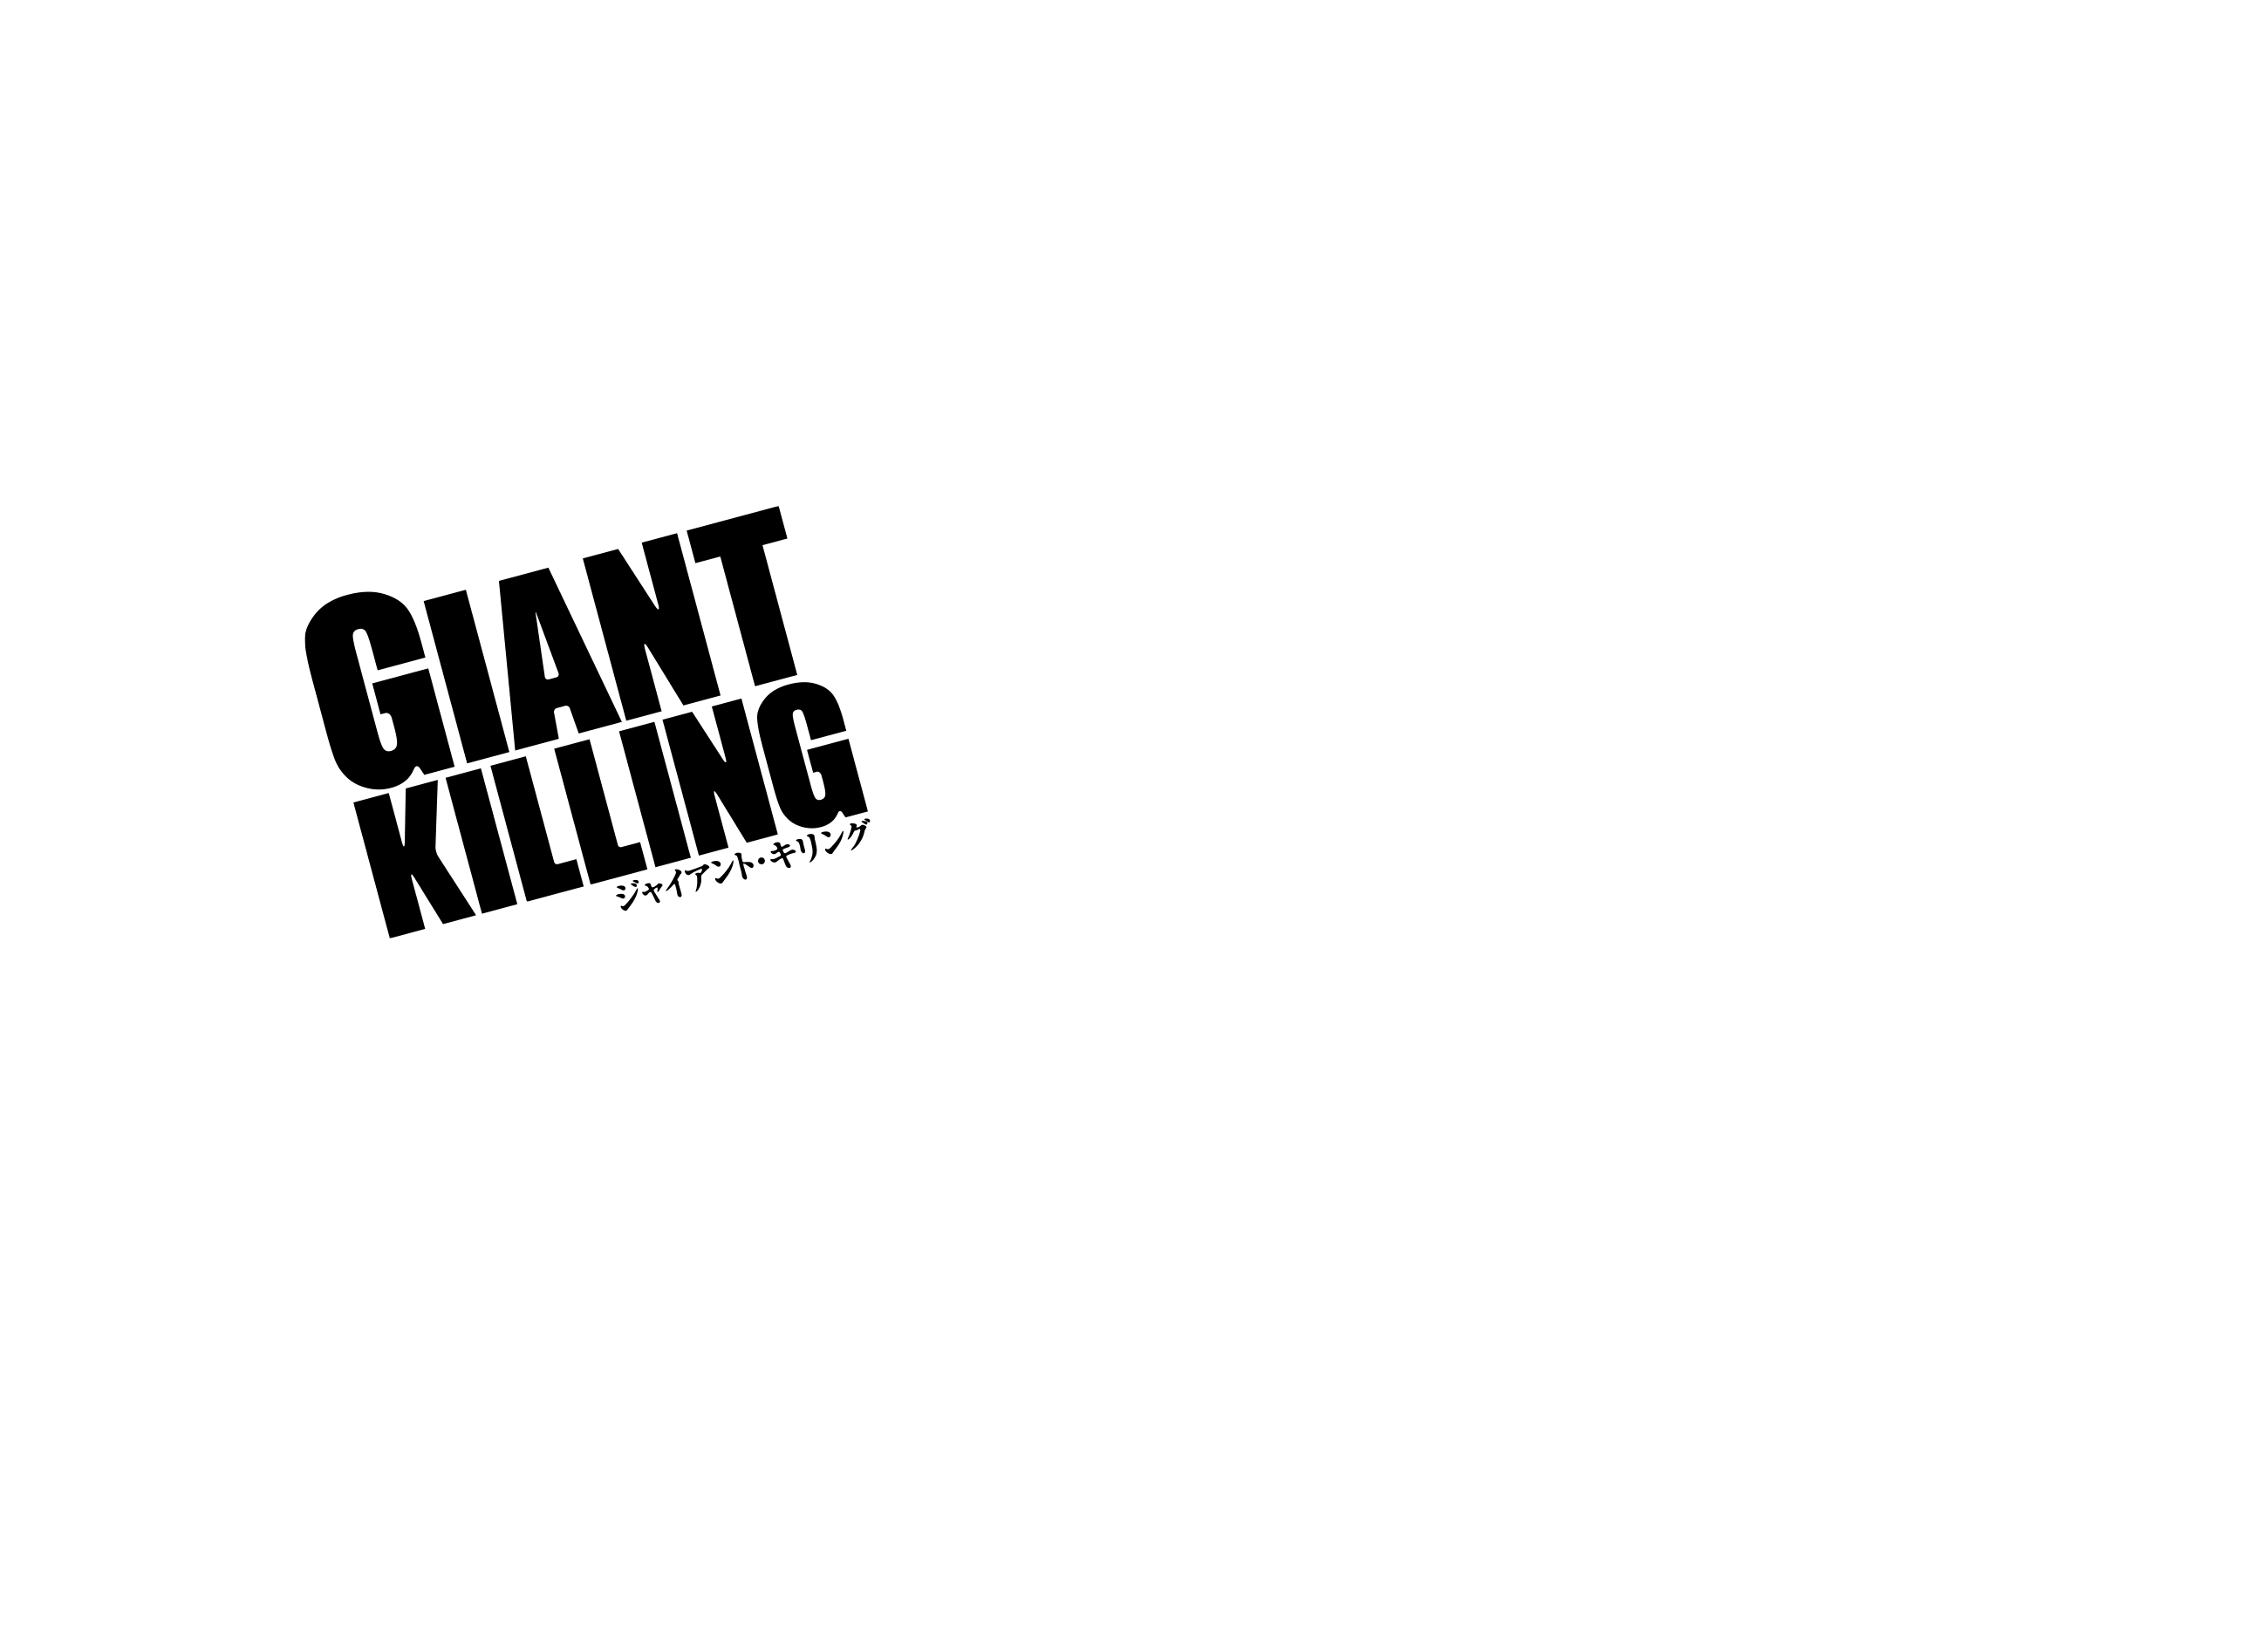 GIANT KILLING